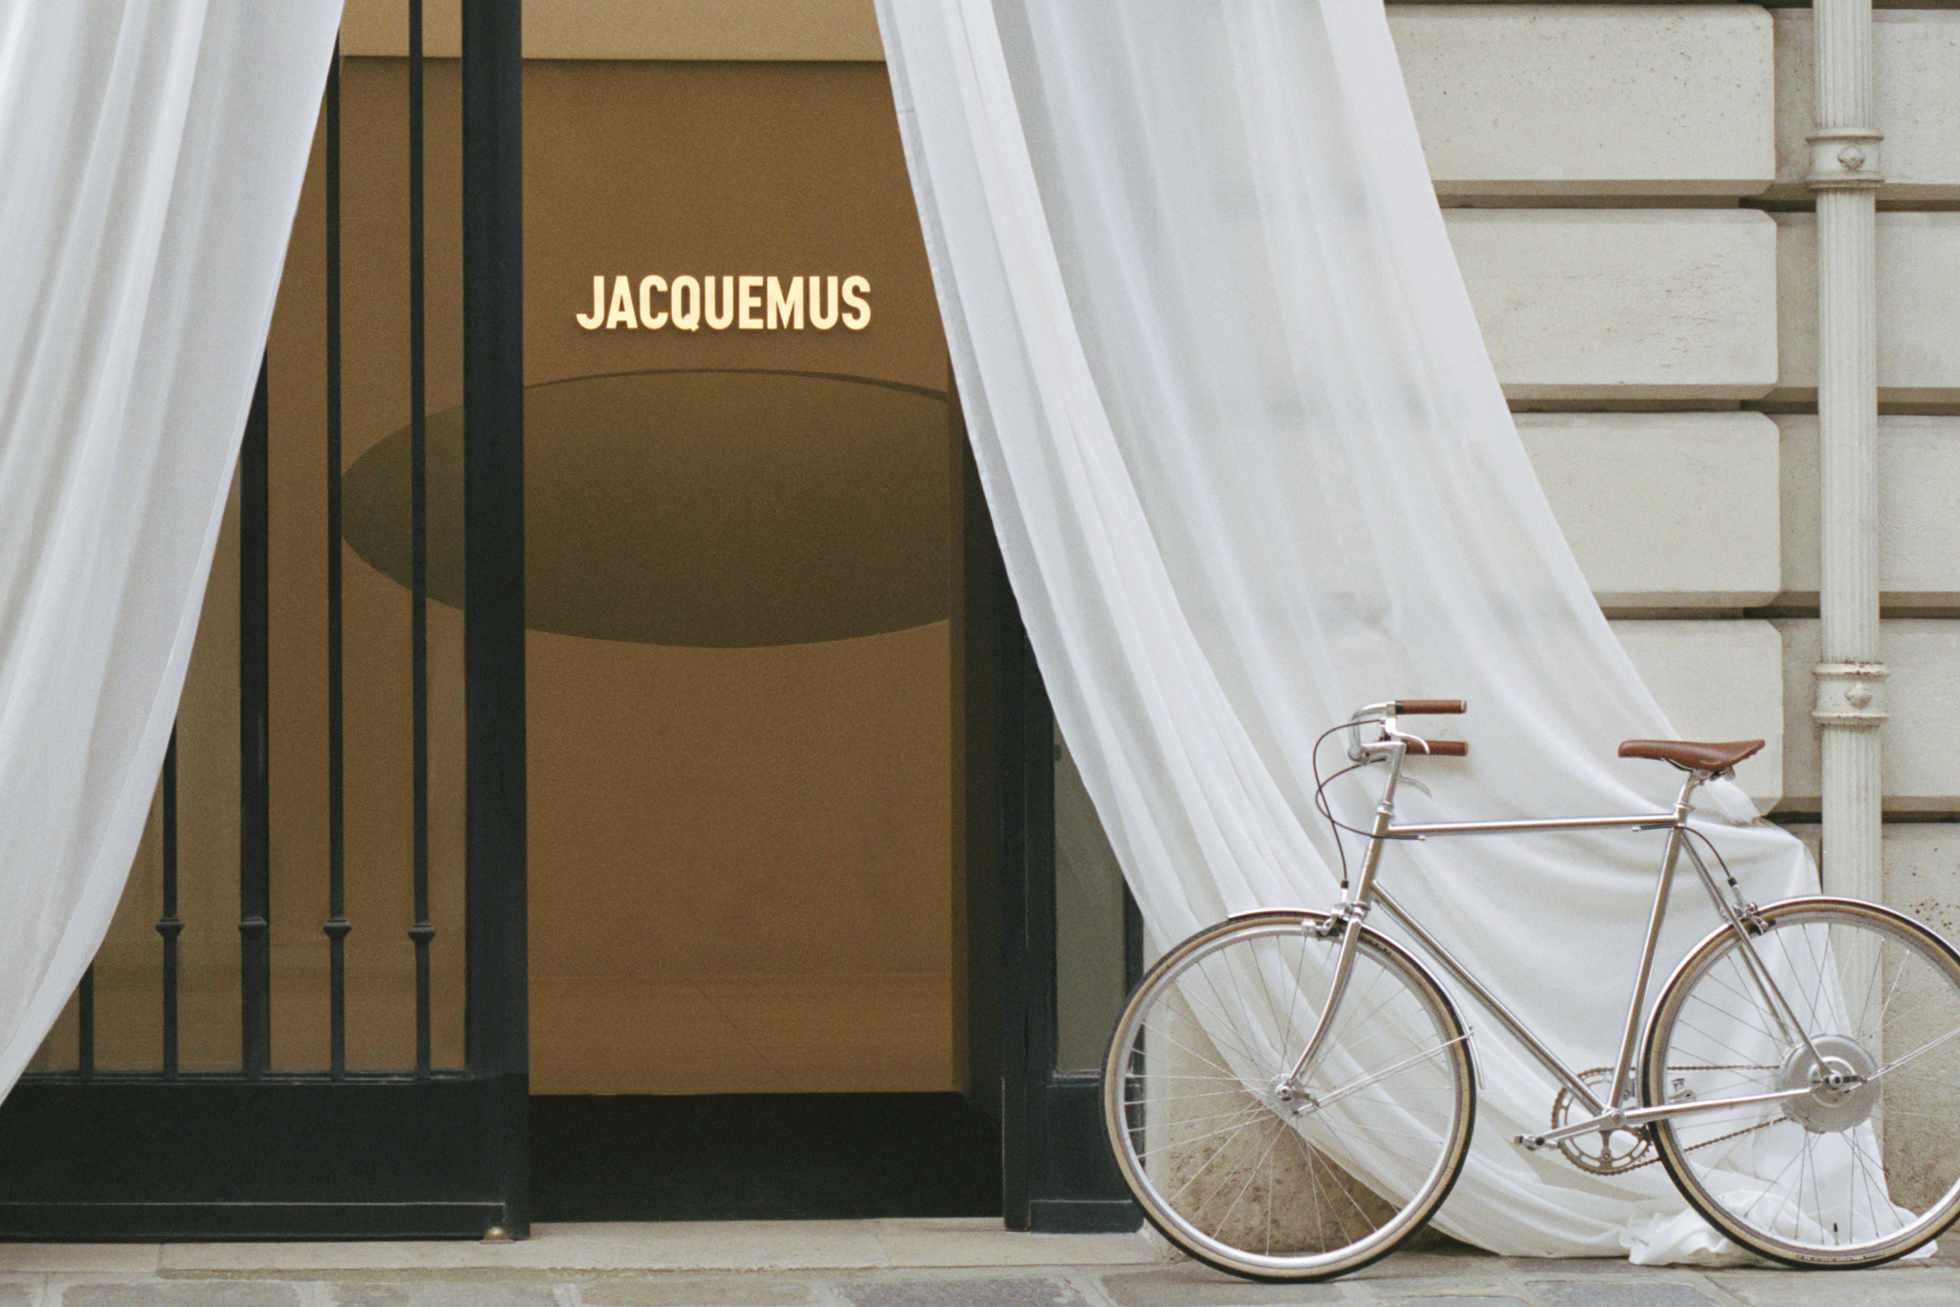 Jacquemus' Paris office as seen outside